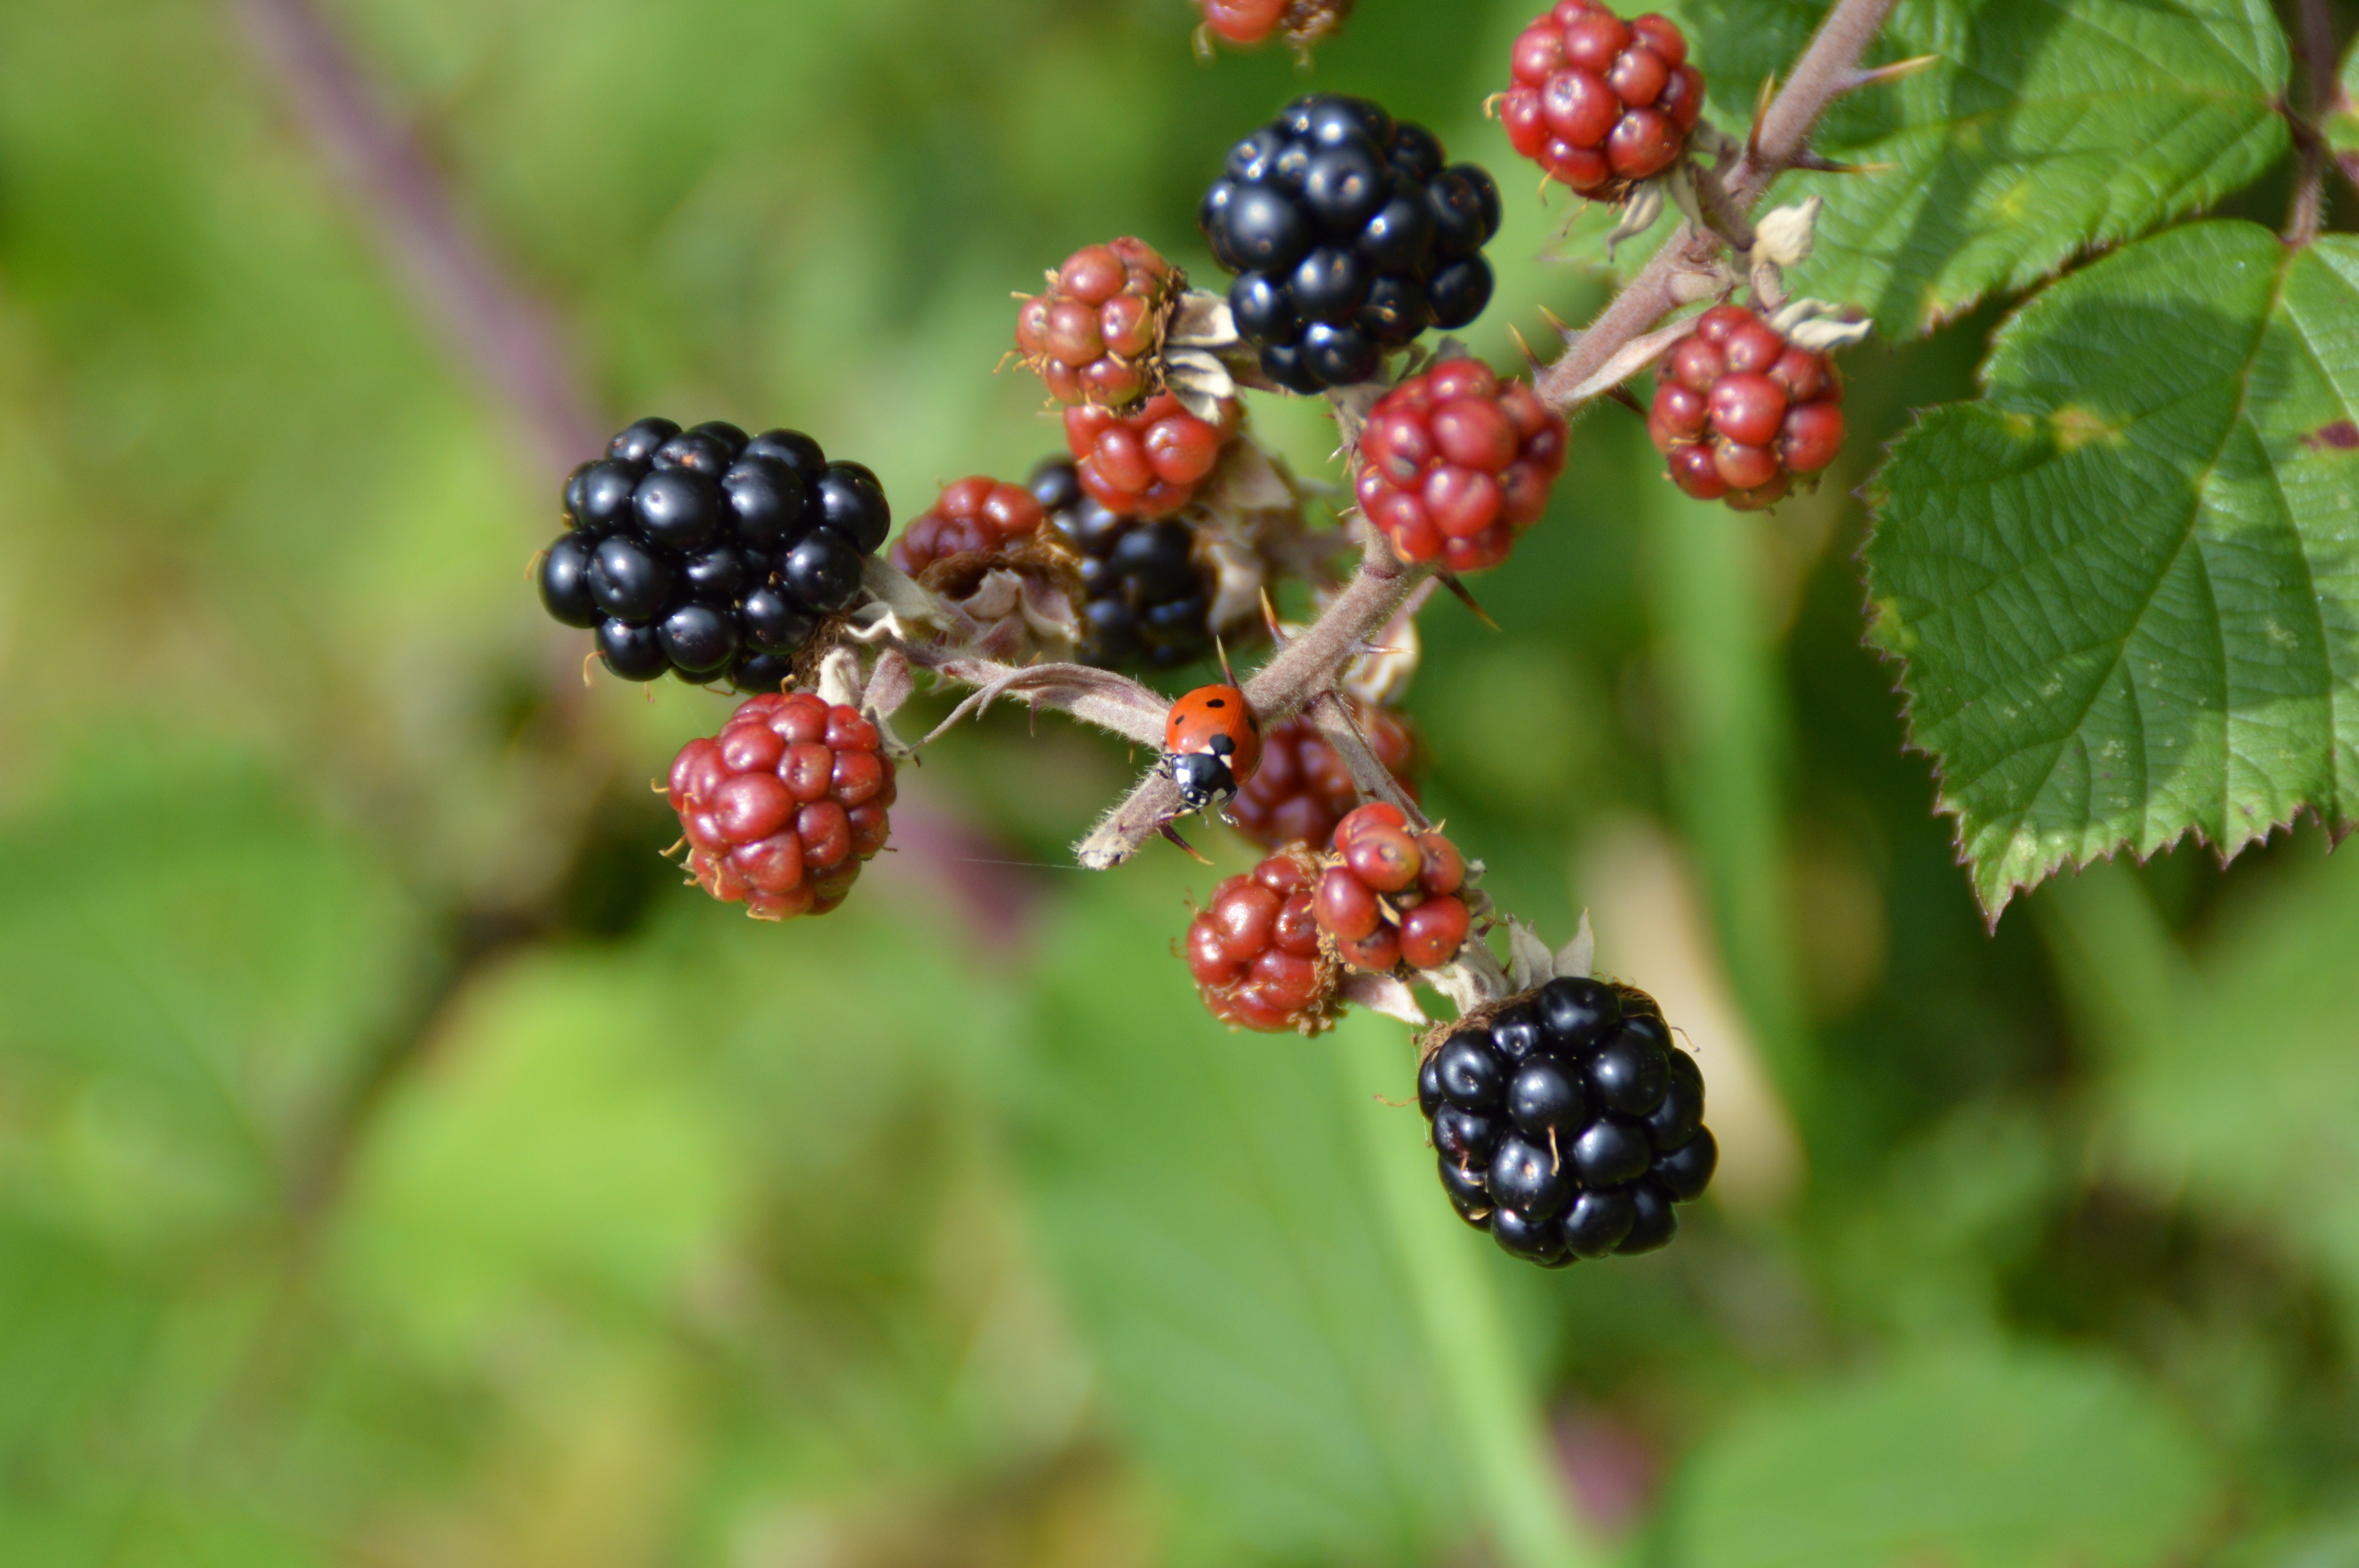 Fruit, Blackberry, Ladybug, Bush, fruit, food and drink